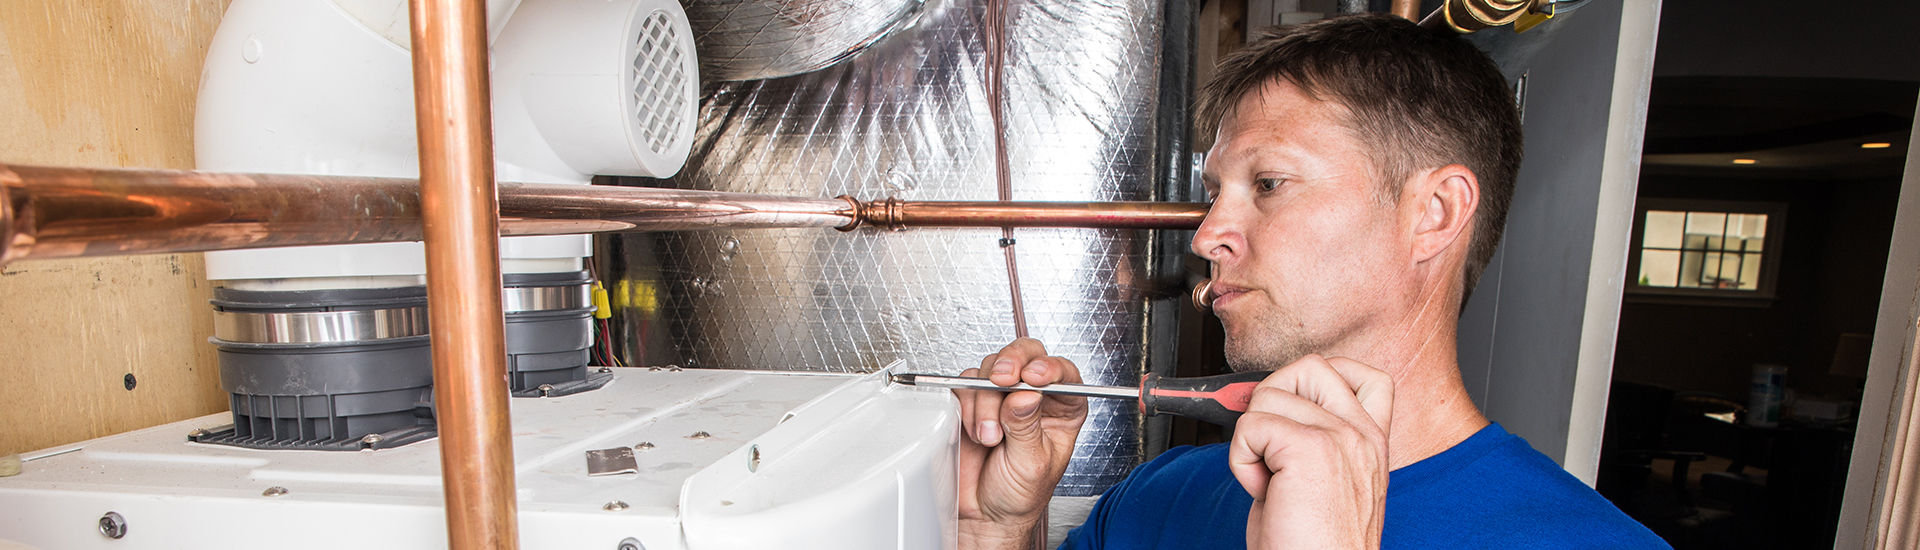 Plumber repairing a water heater